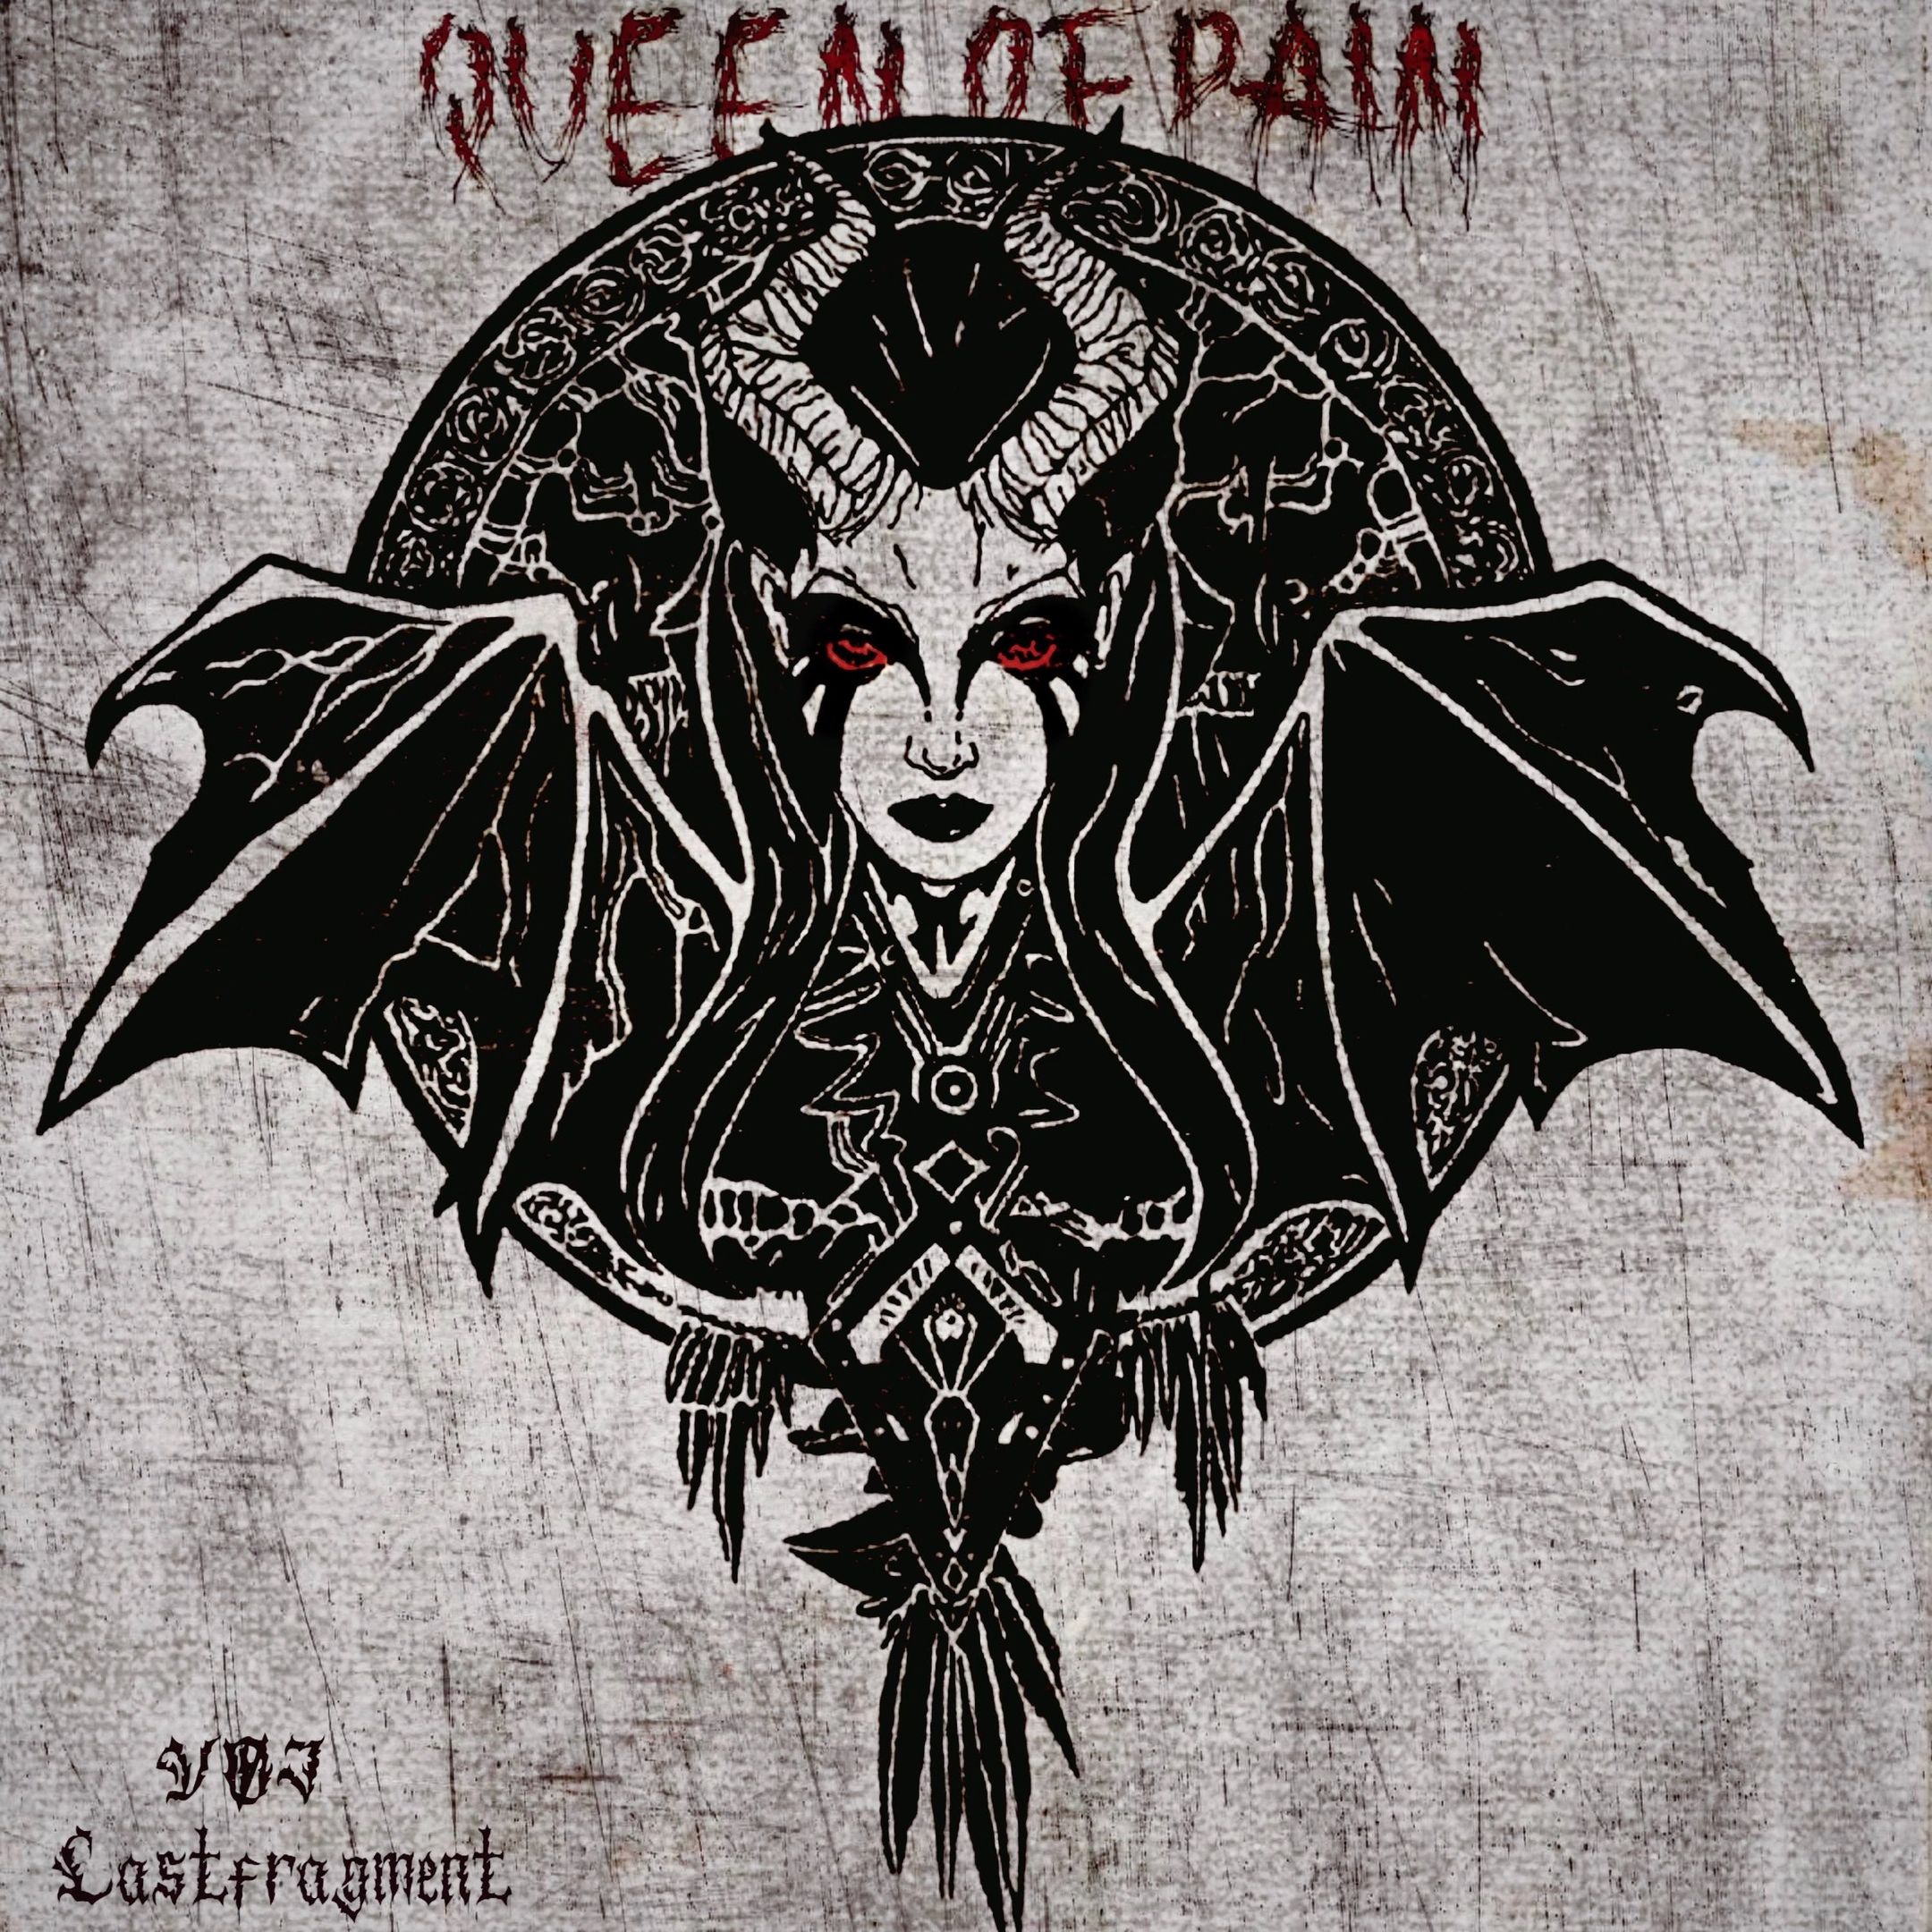 Skinuti VØJ & Lastfragment - Queen of Pain